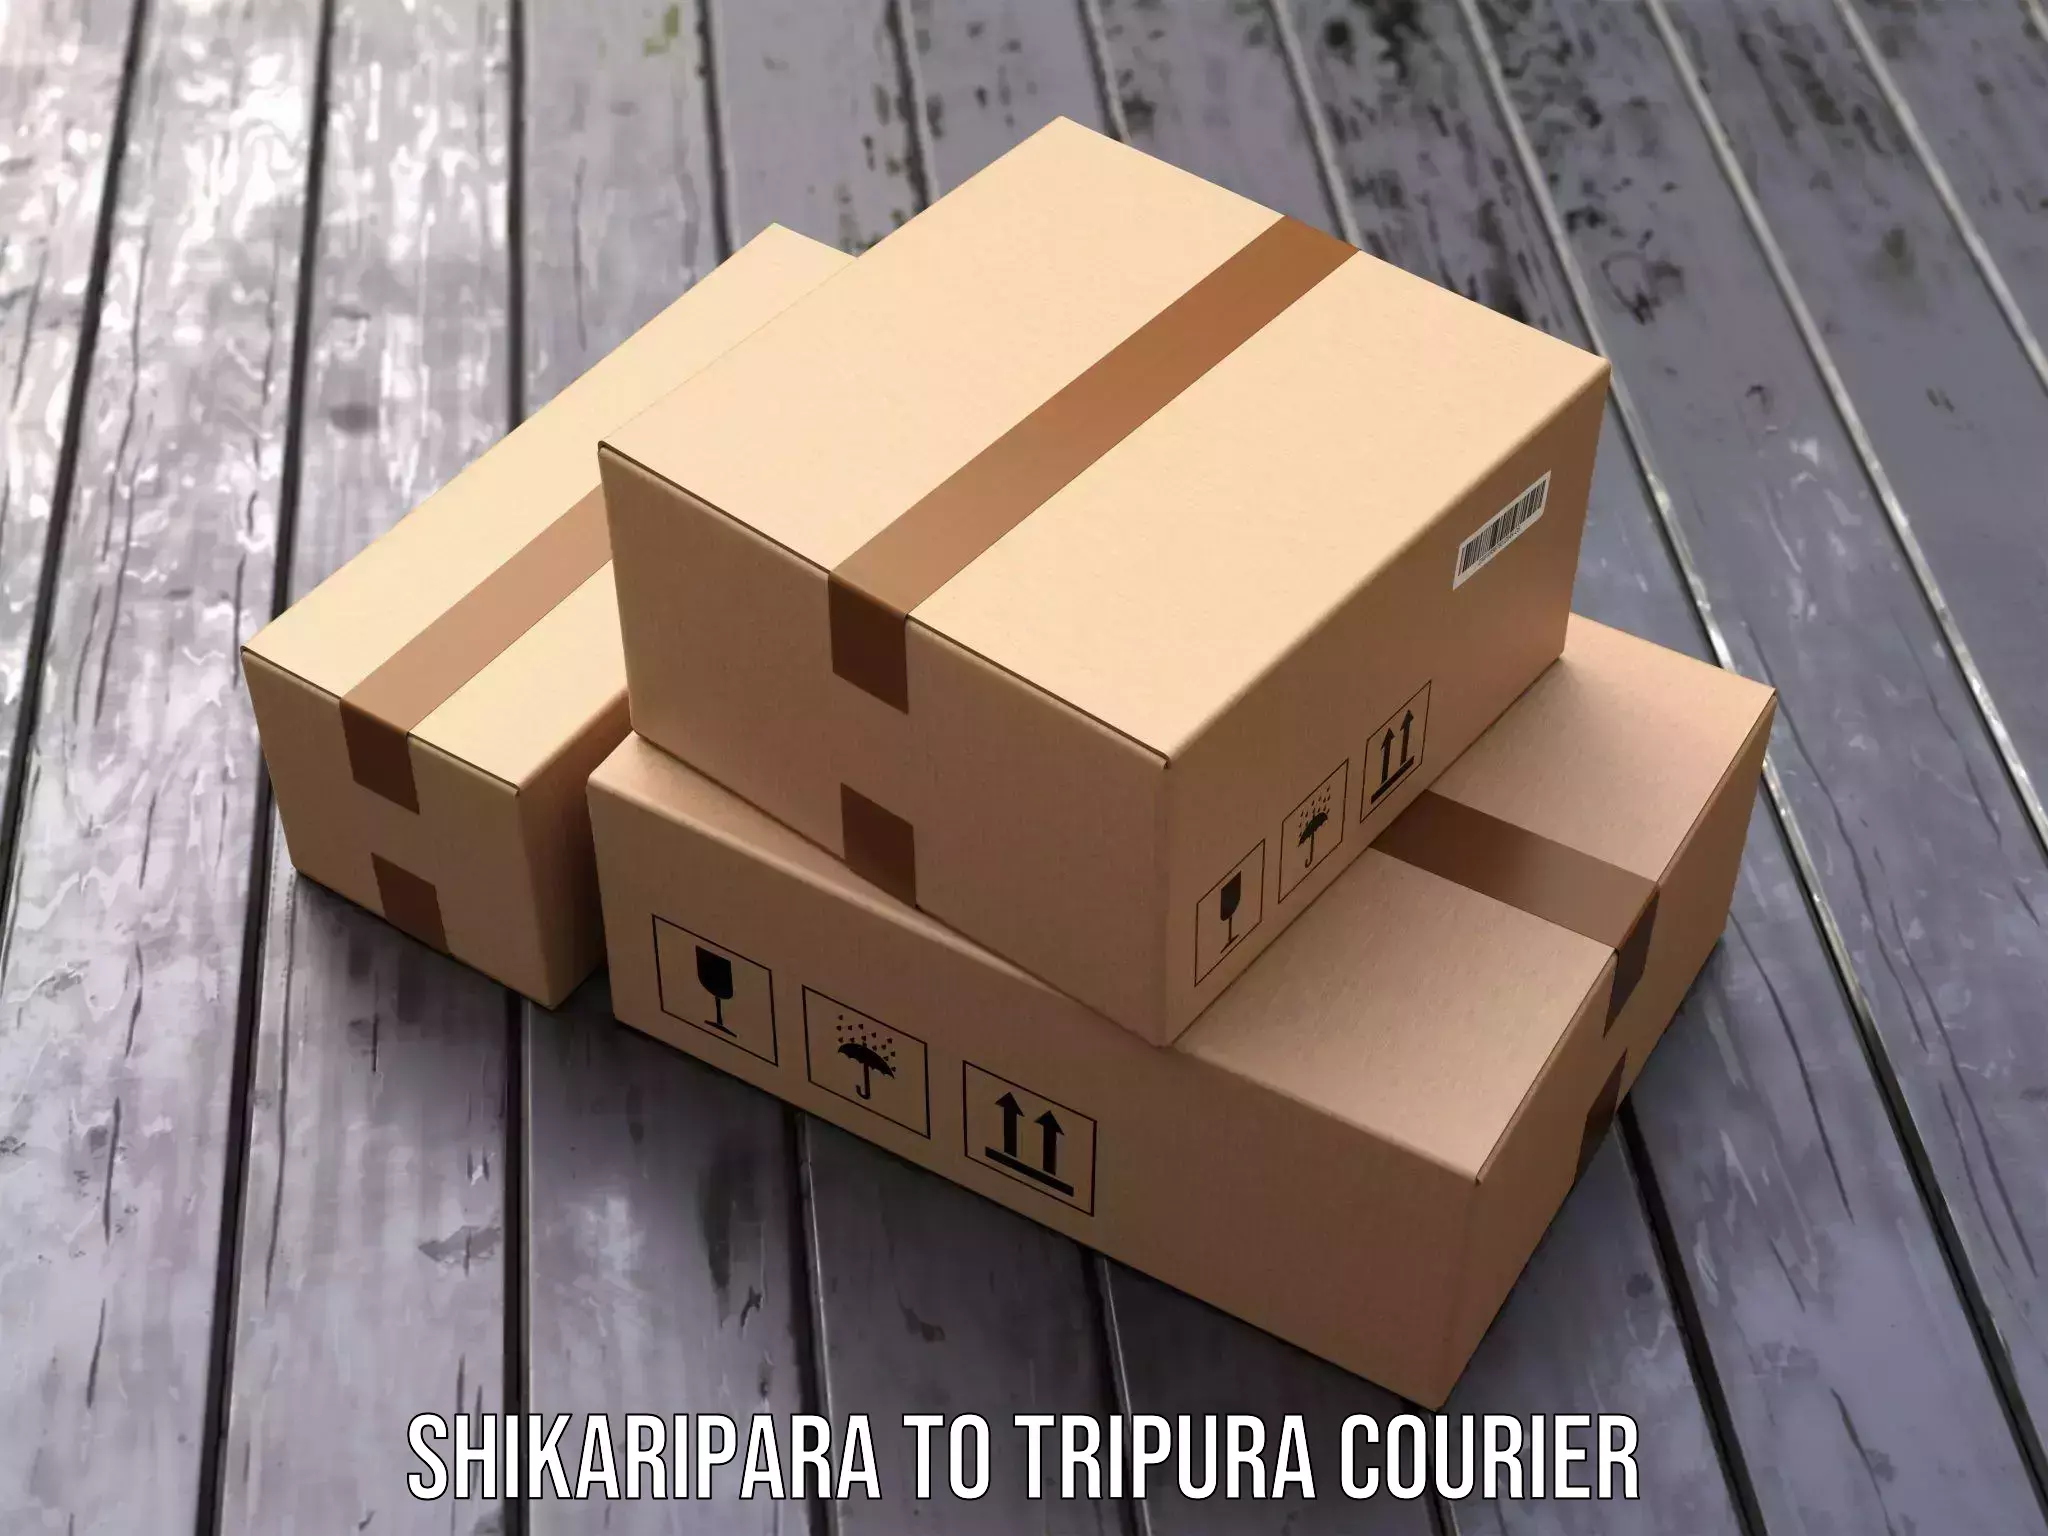 Reliable delivery network Shikaripara to Agartala